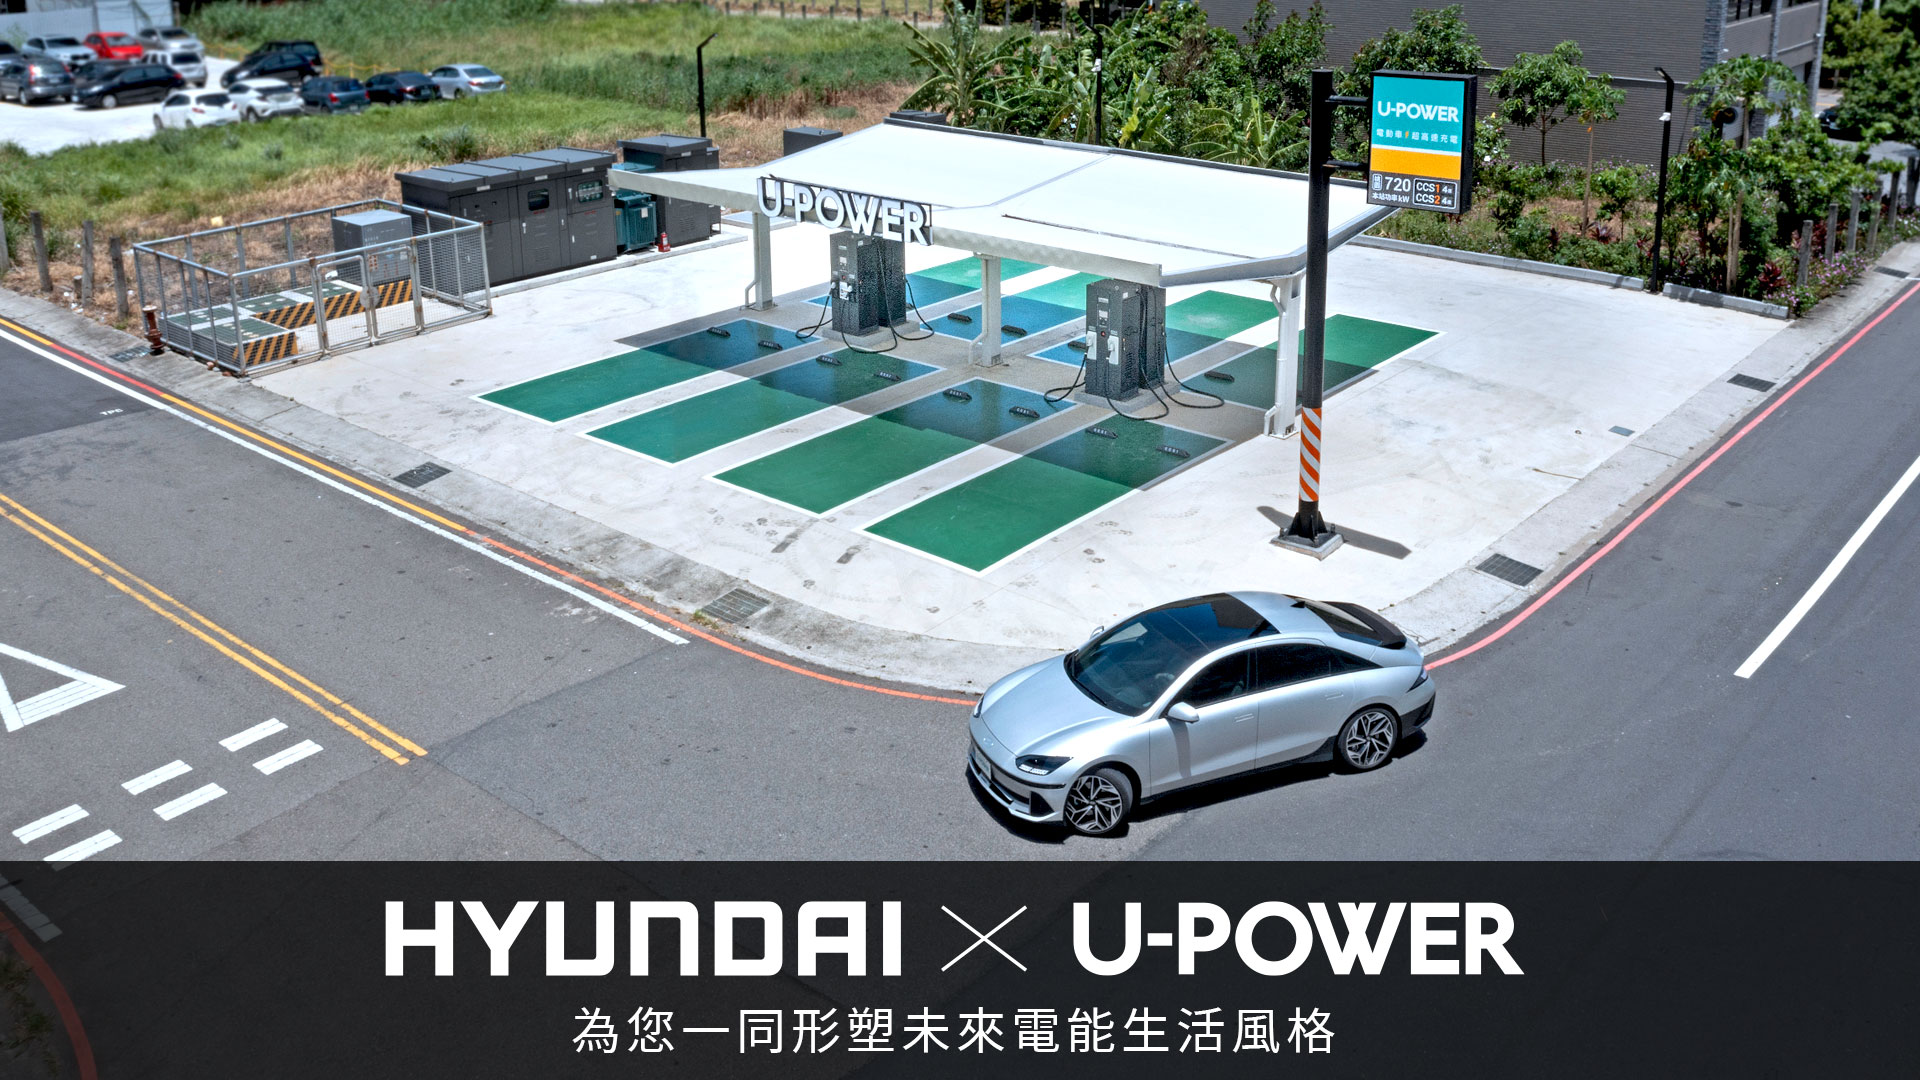 HYUNDAI ✕ U-POWER 為您一同形塑未來電能生活風格